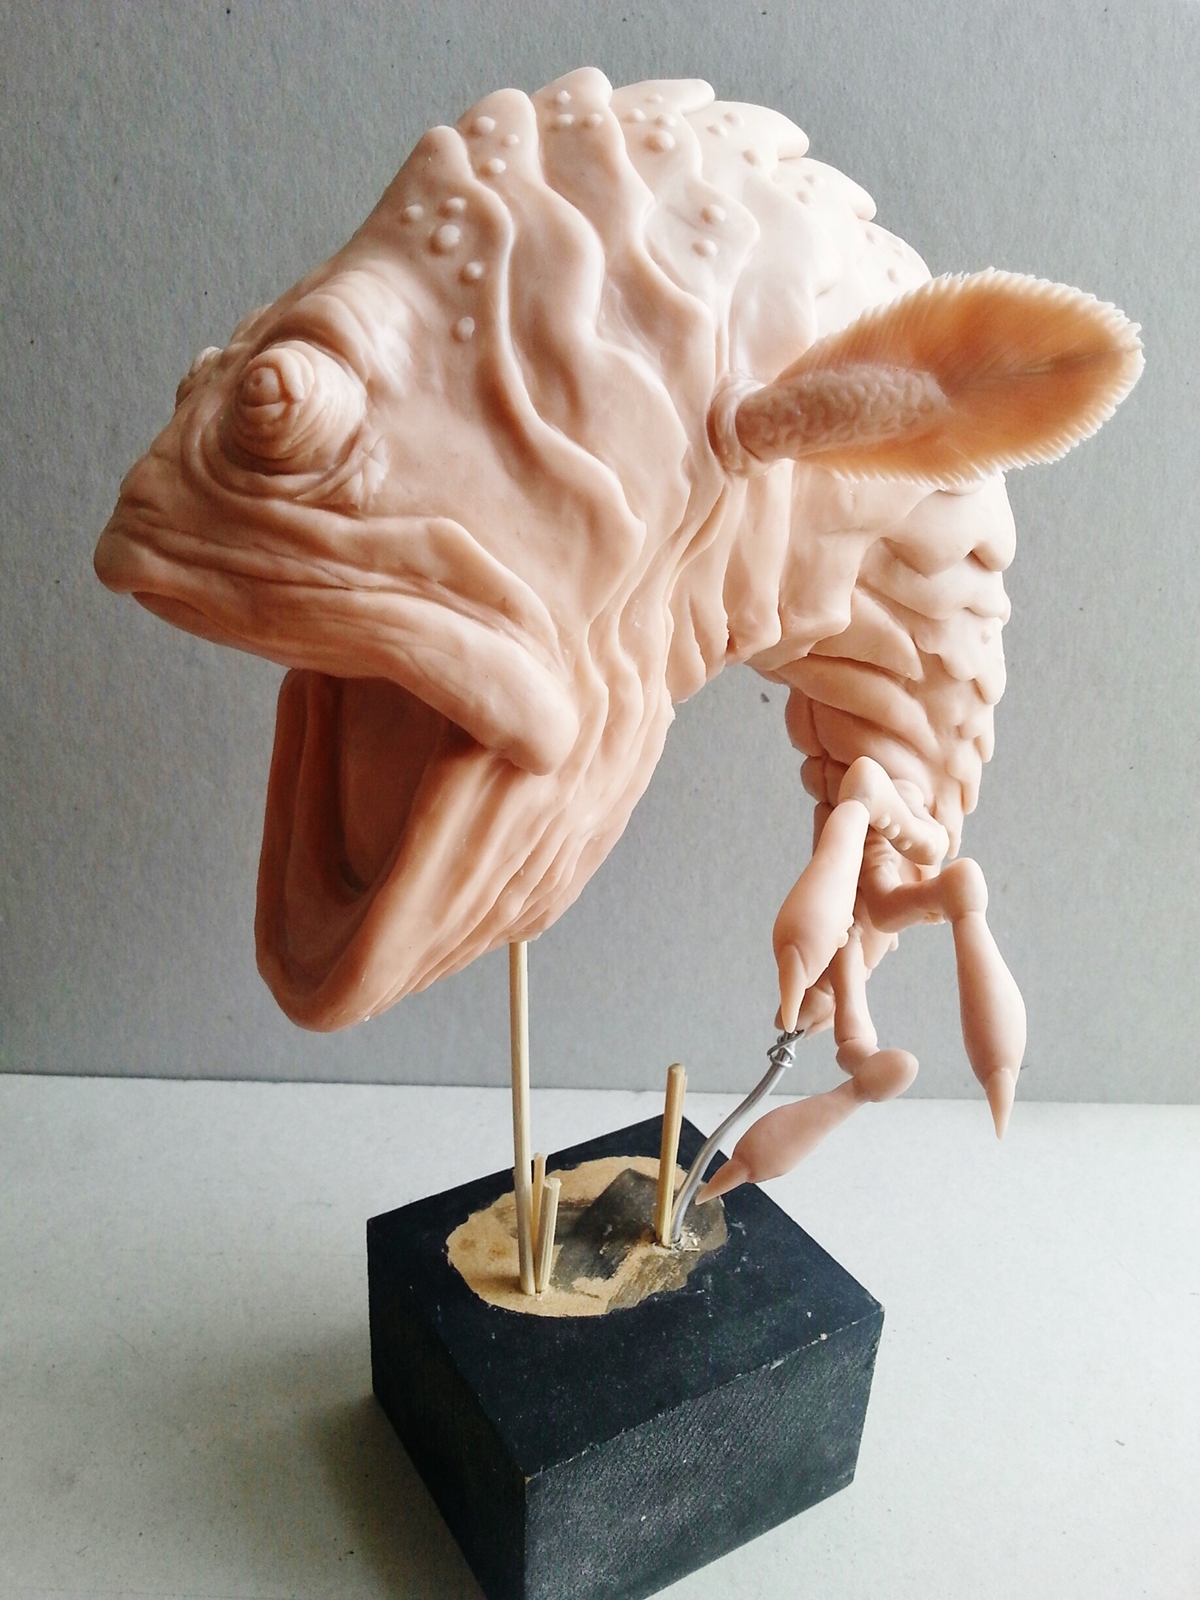 Starwars creature creaturedesign art artistic sculpture fantasy sea fish fins clay polymerclay  